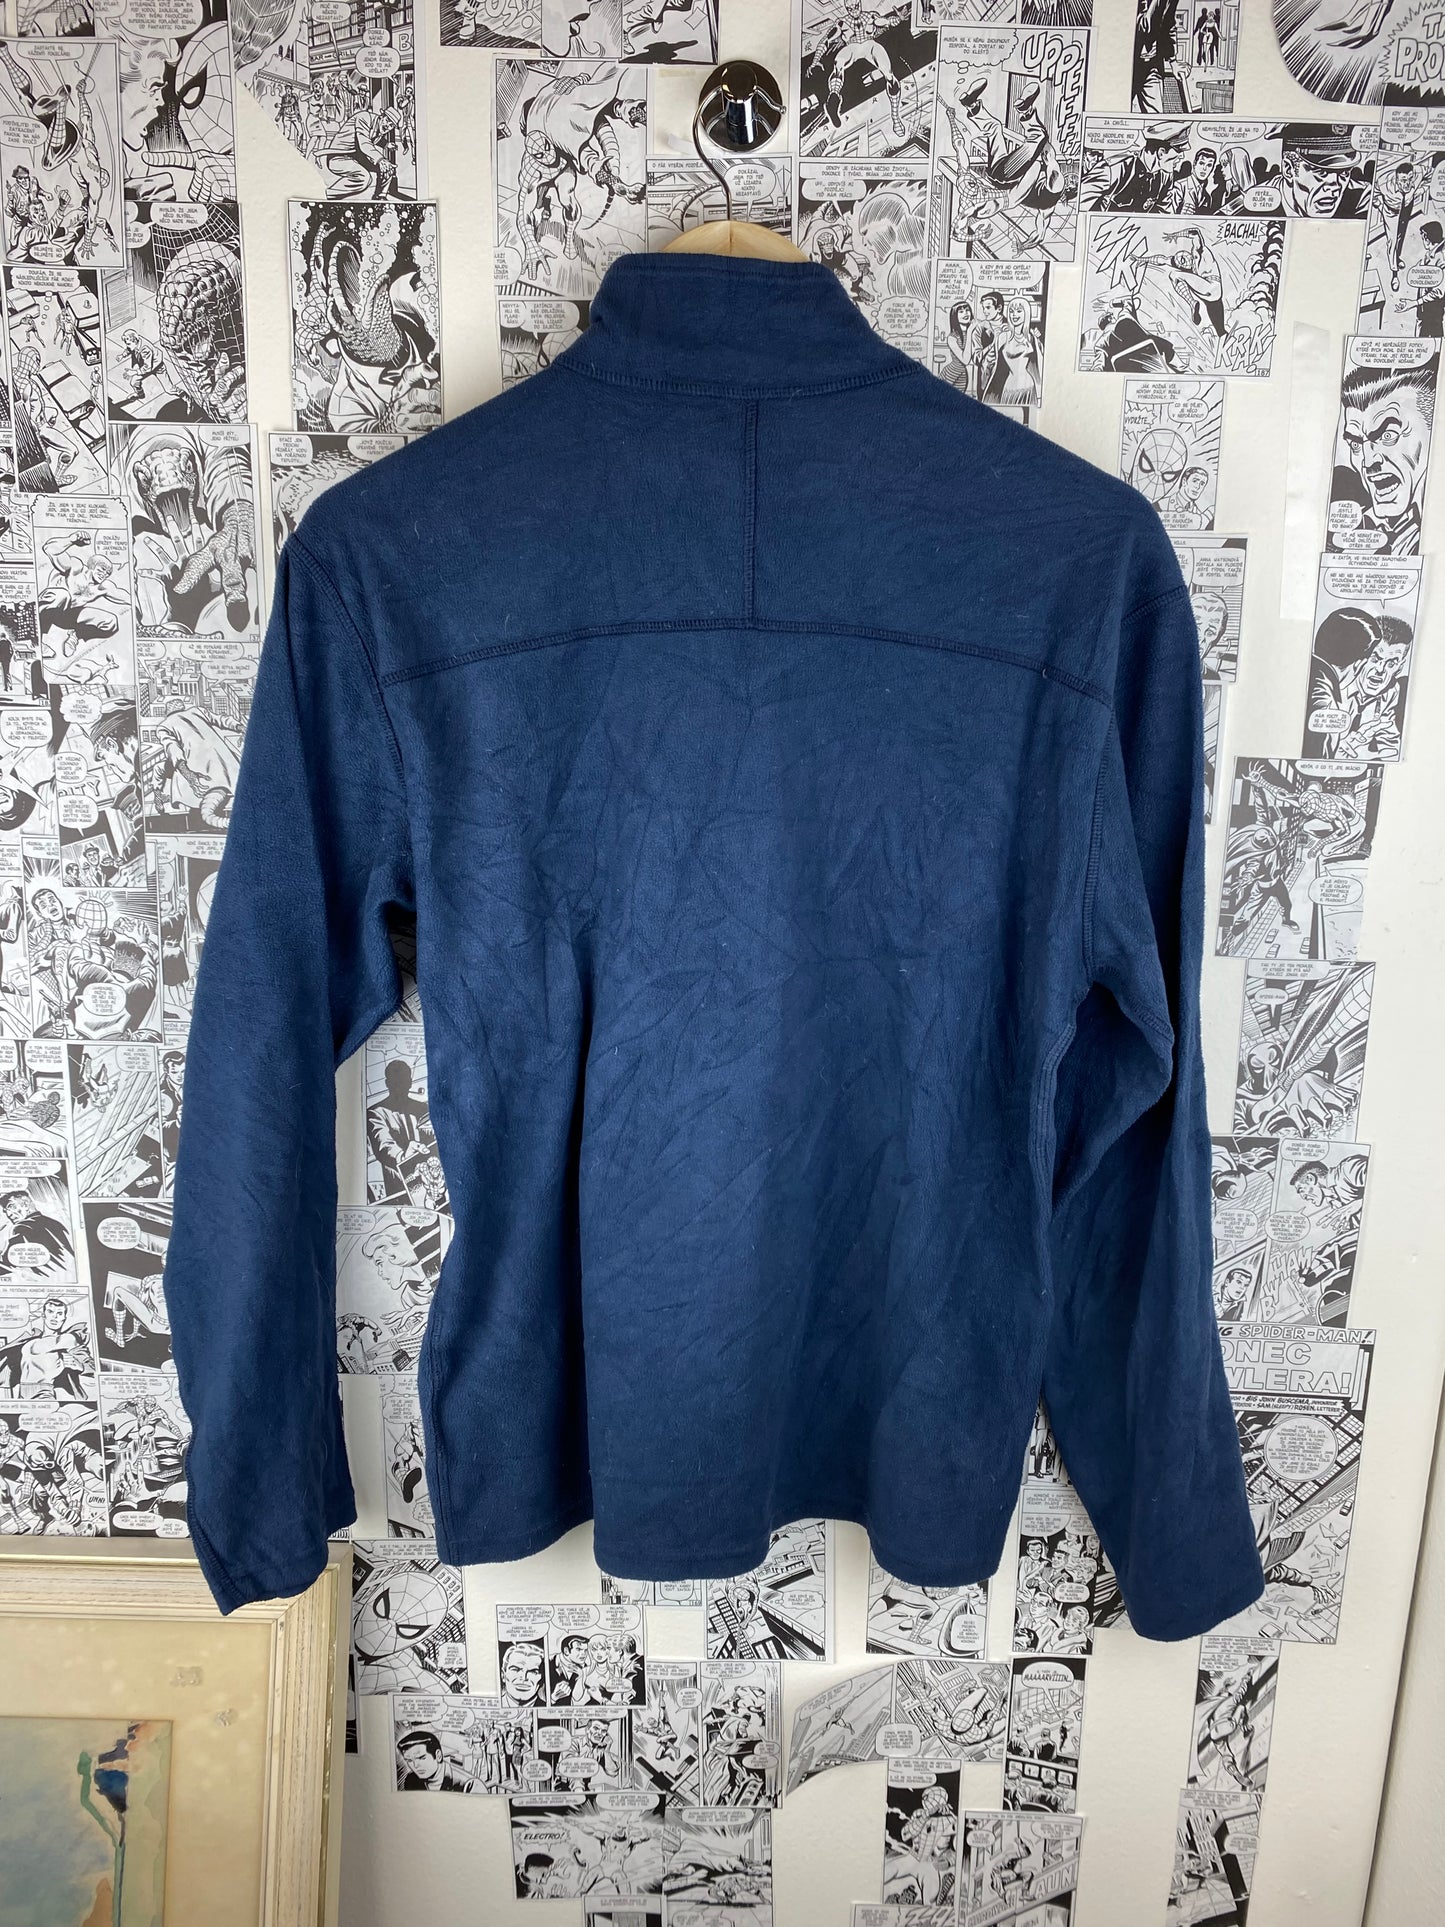 The North Face - Fleece Sweatshirt - size S